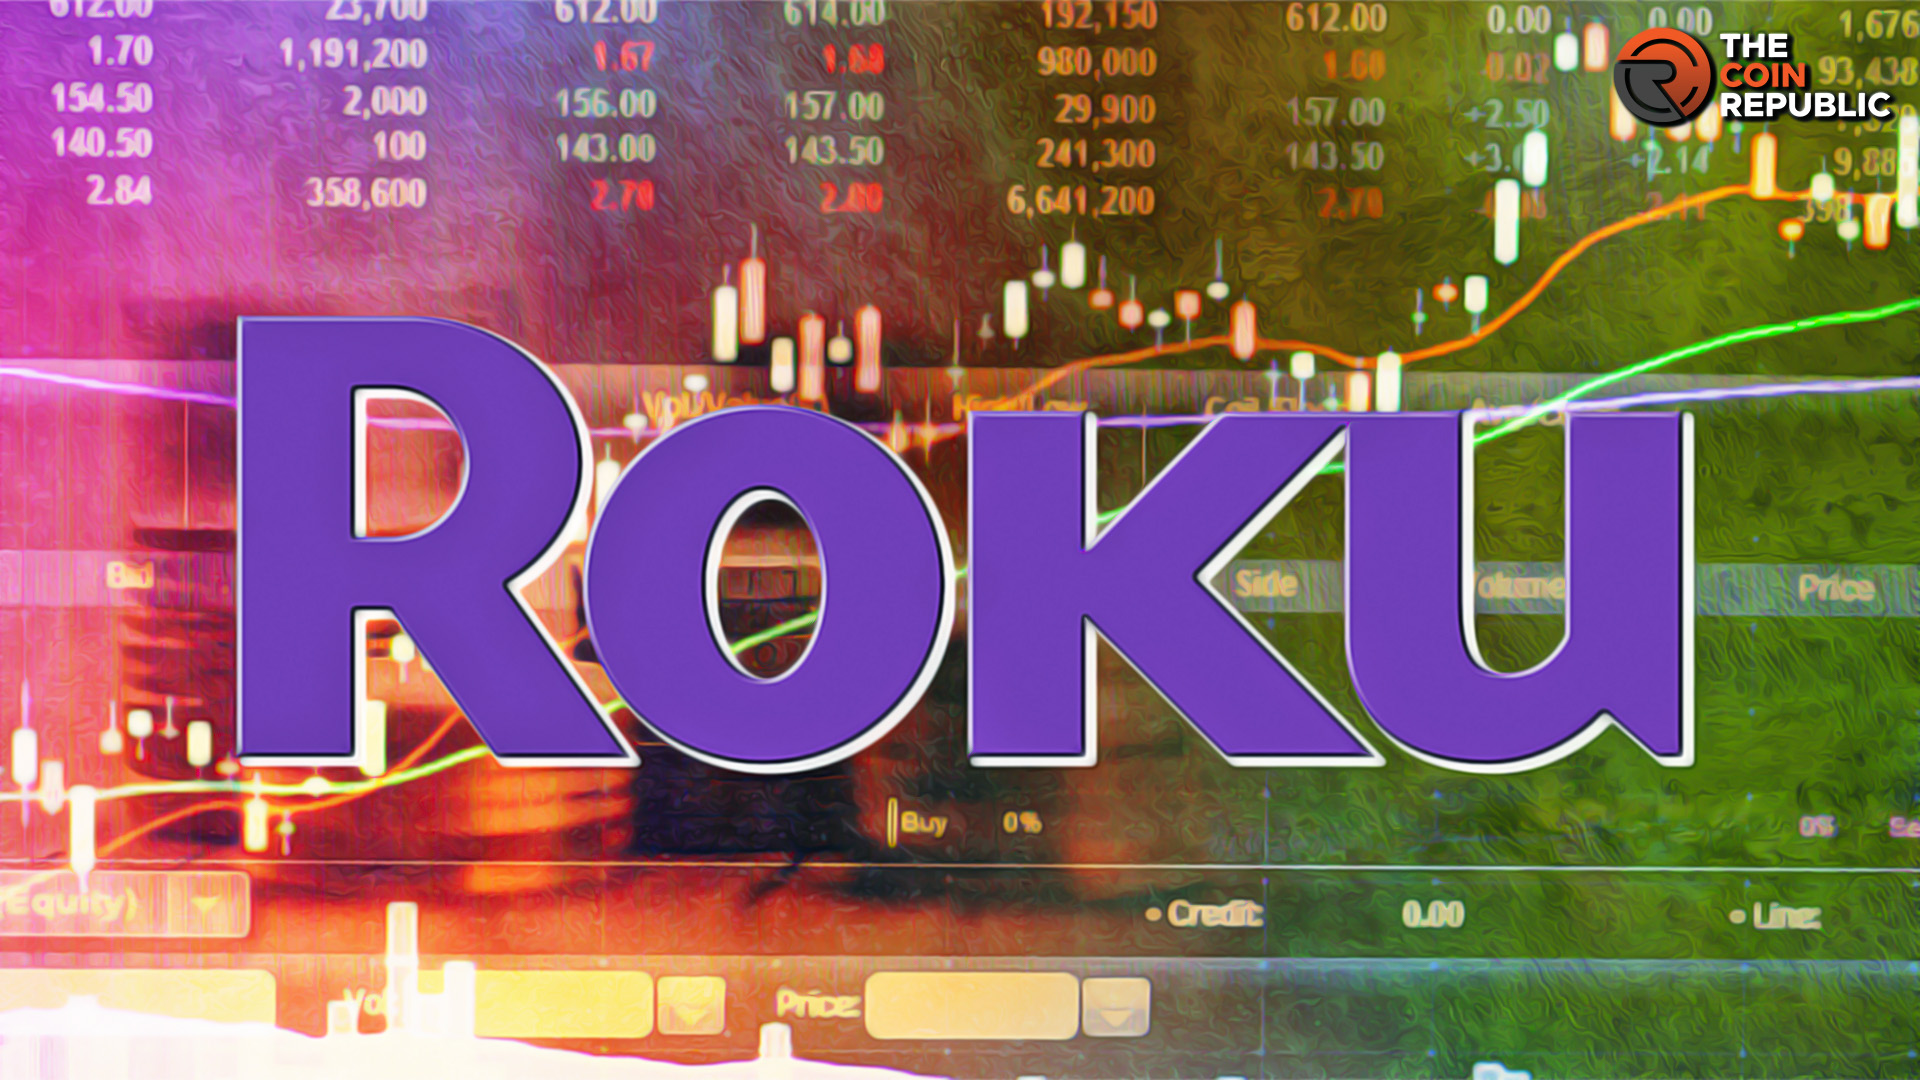 ROKU Stock Price Analysis: Will Earnings Halt the Downfall?